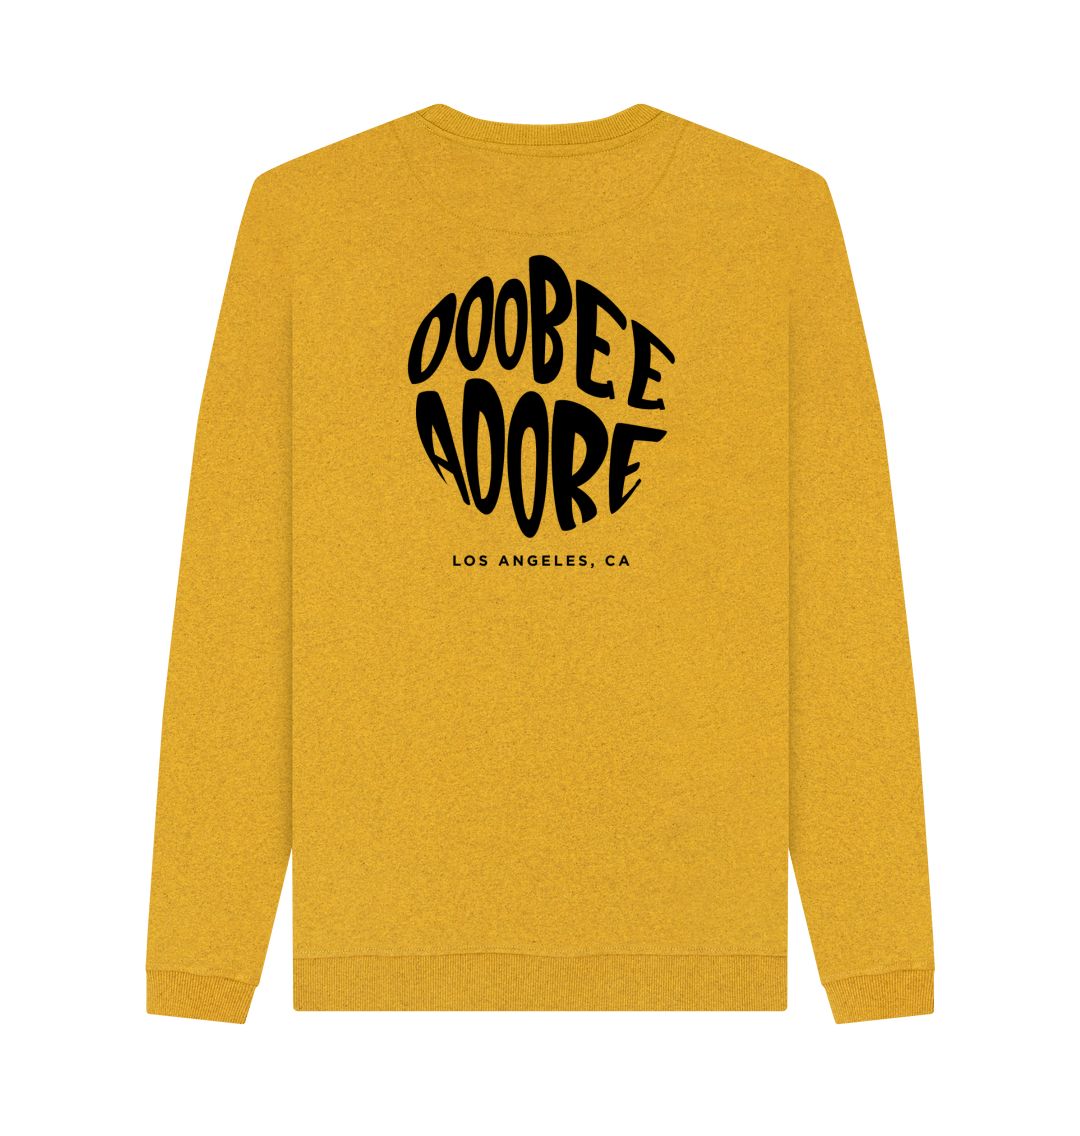 Sunflower Yellow Doobee Adore World Los Angeles Sweatshirt